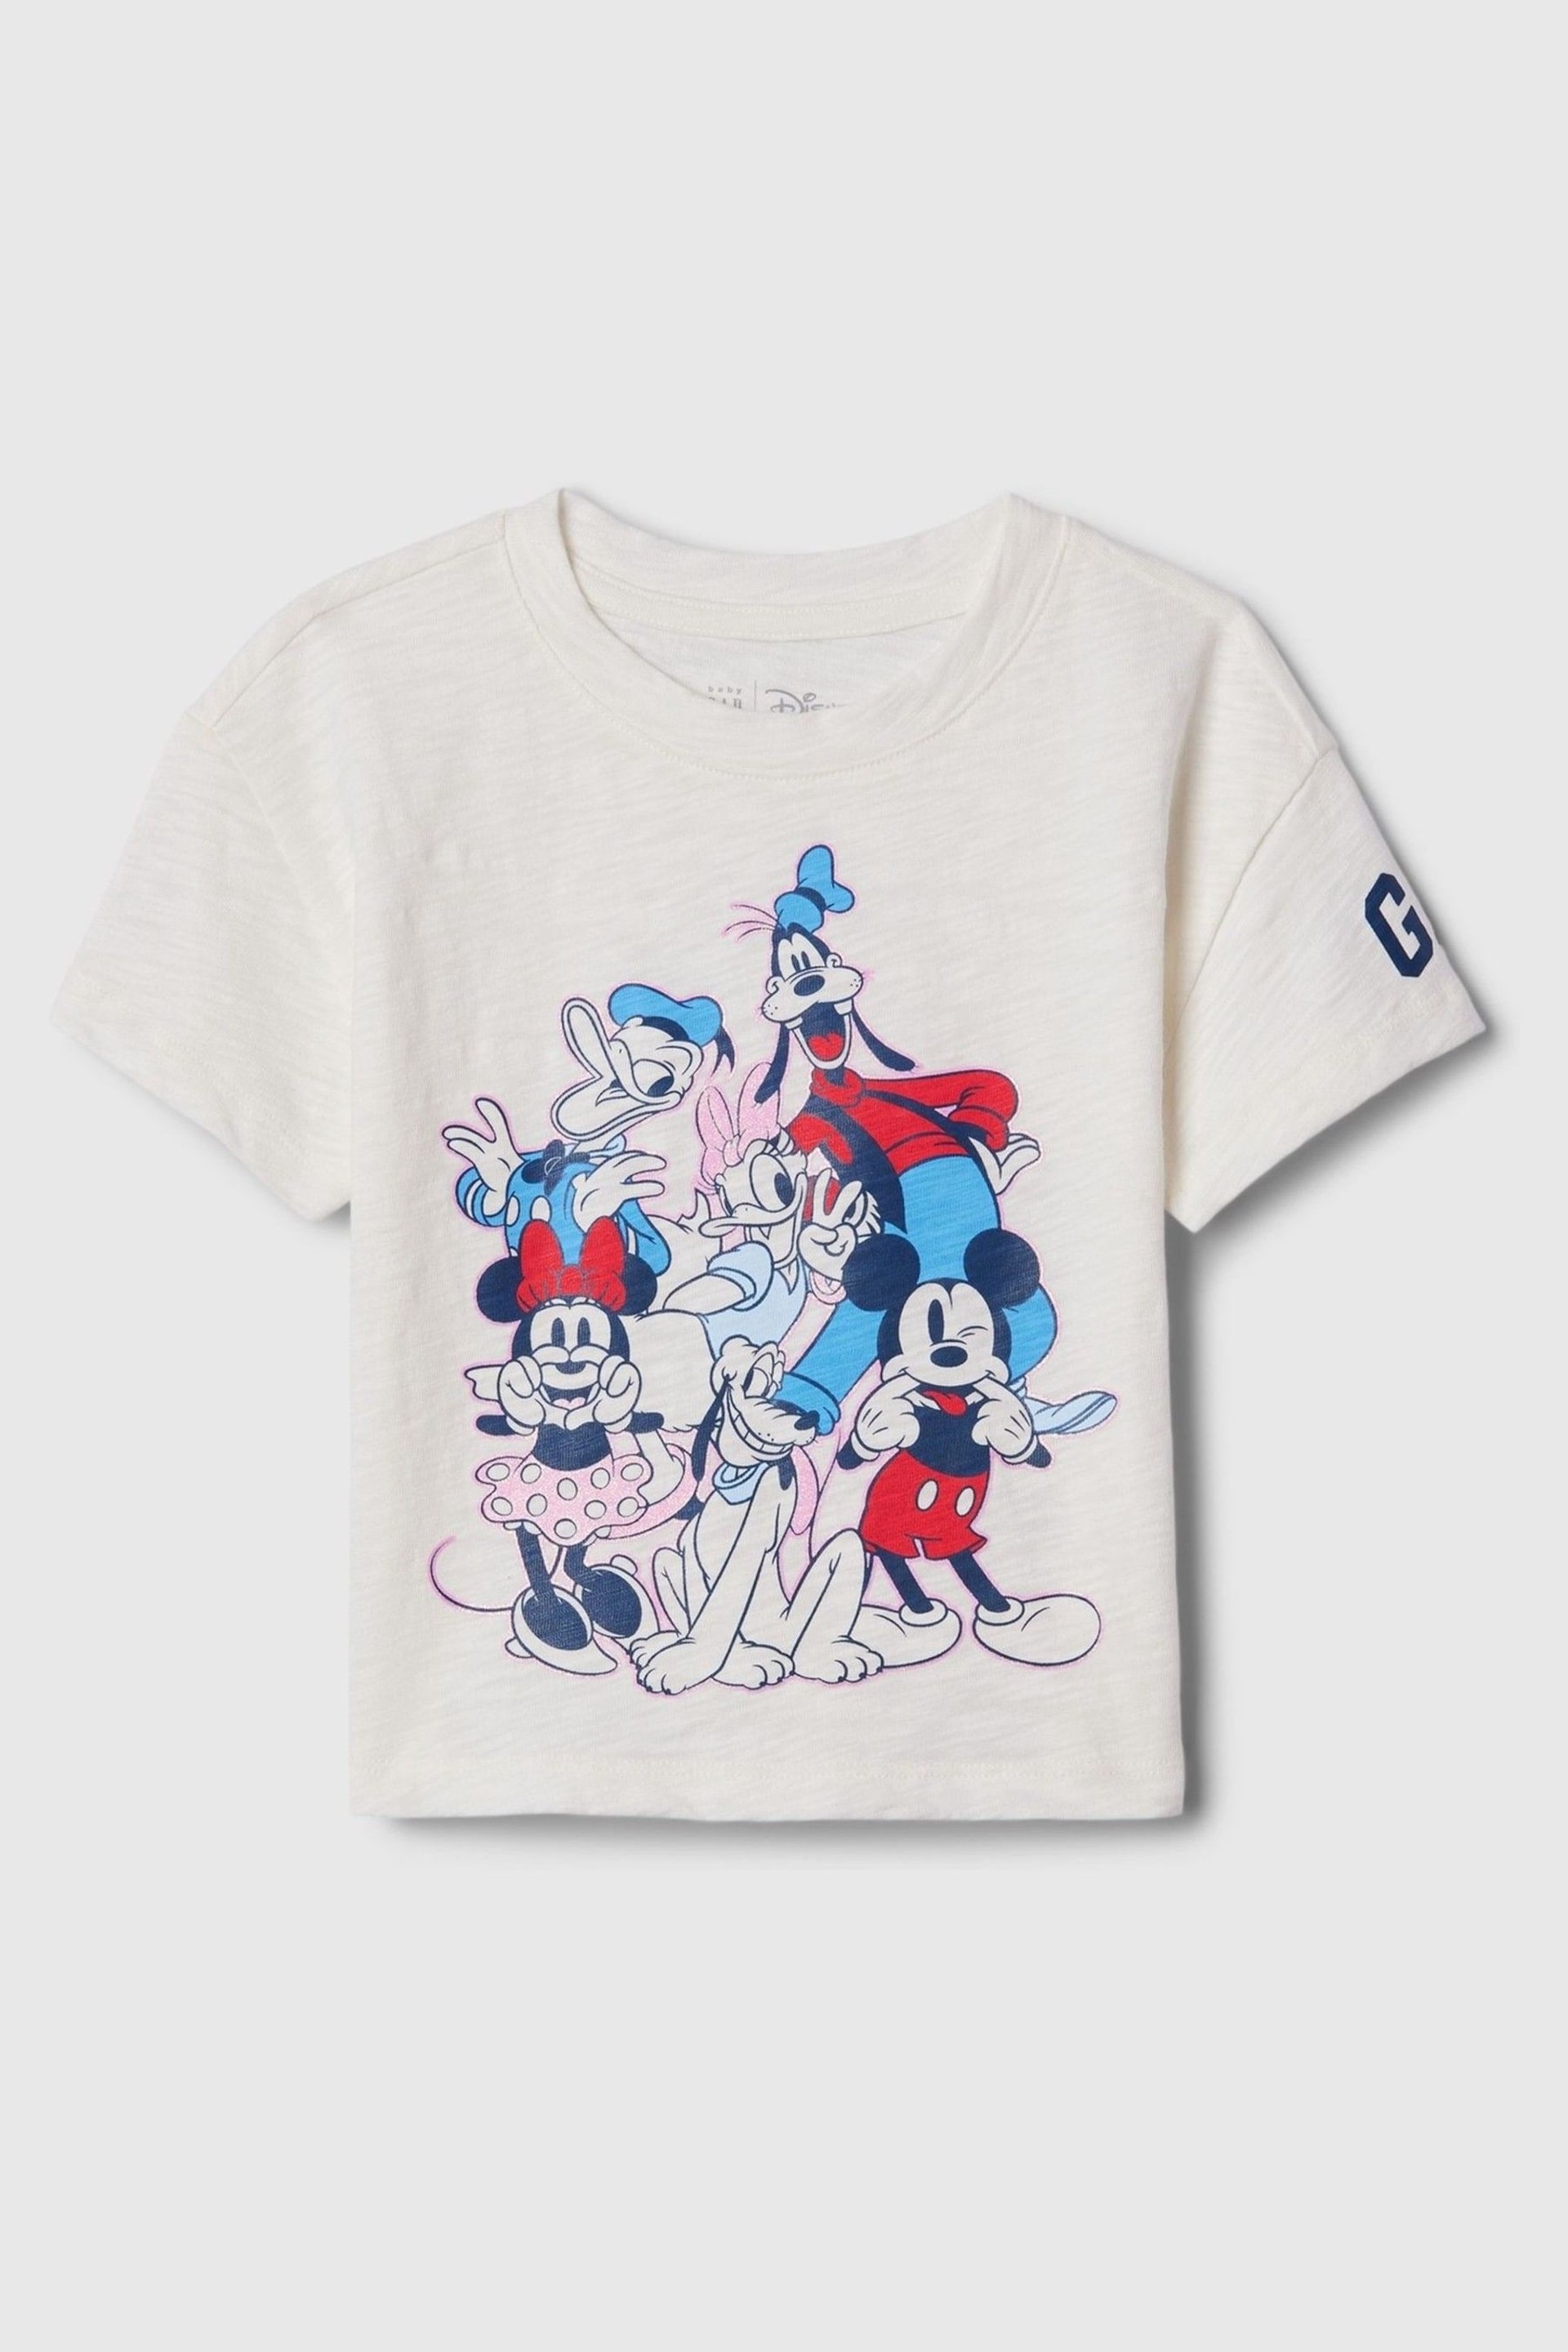 Gap White Cotton Disney Graphic Short Sleeve T-Shirt (12mths-5yrs) - Image 1 of 2